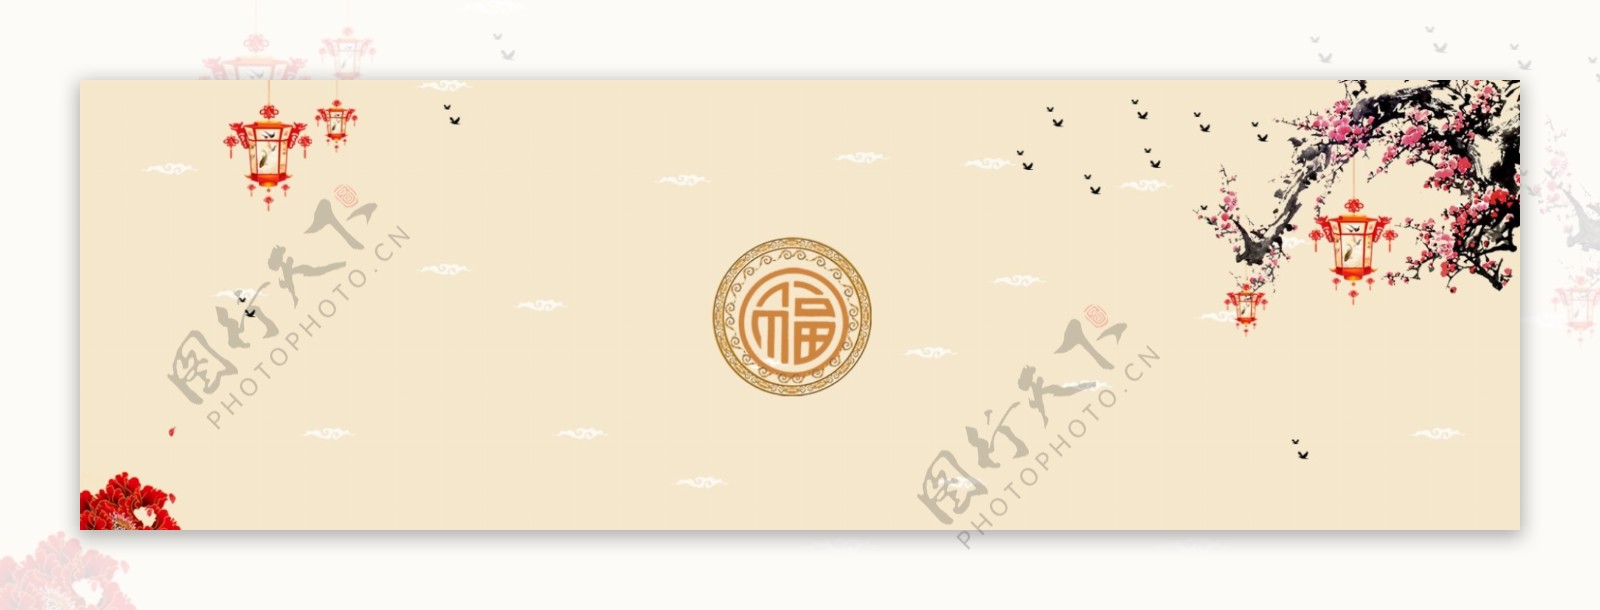 鞭炮新年年货节中国风banner背景